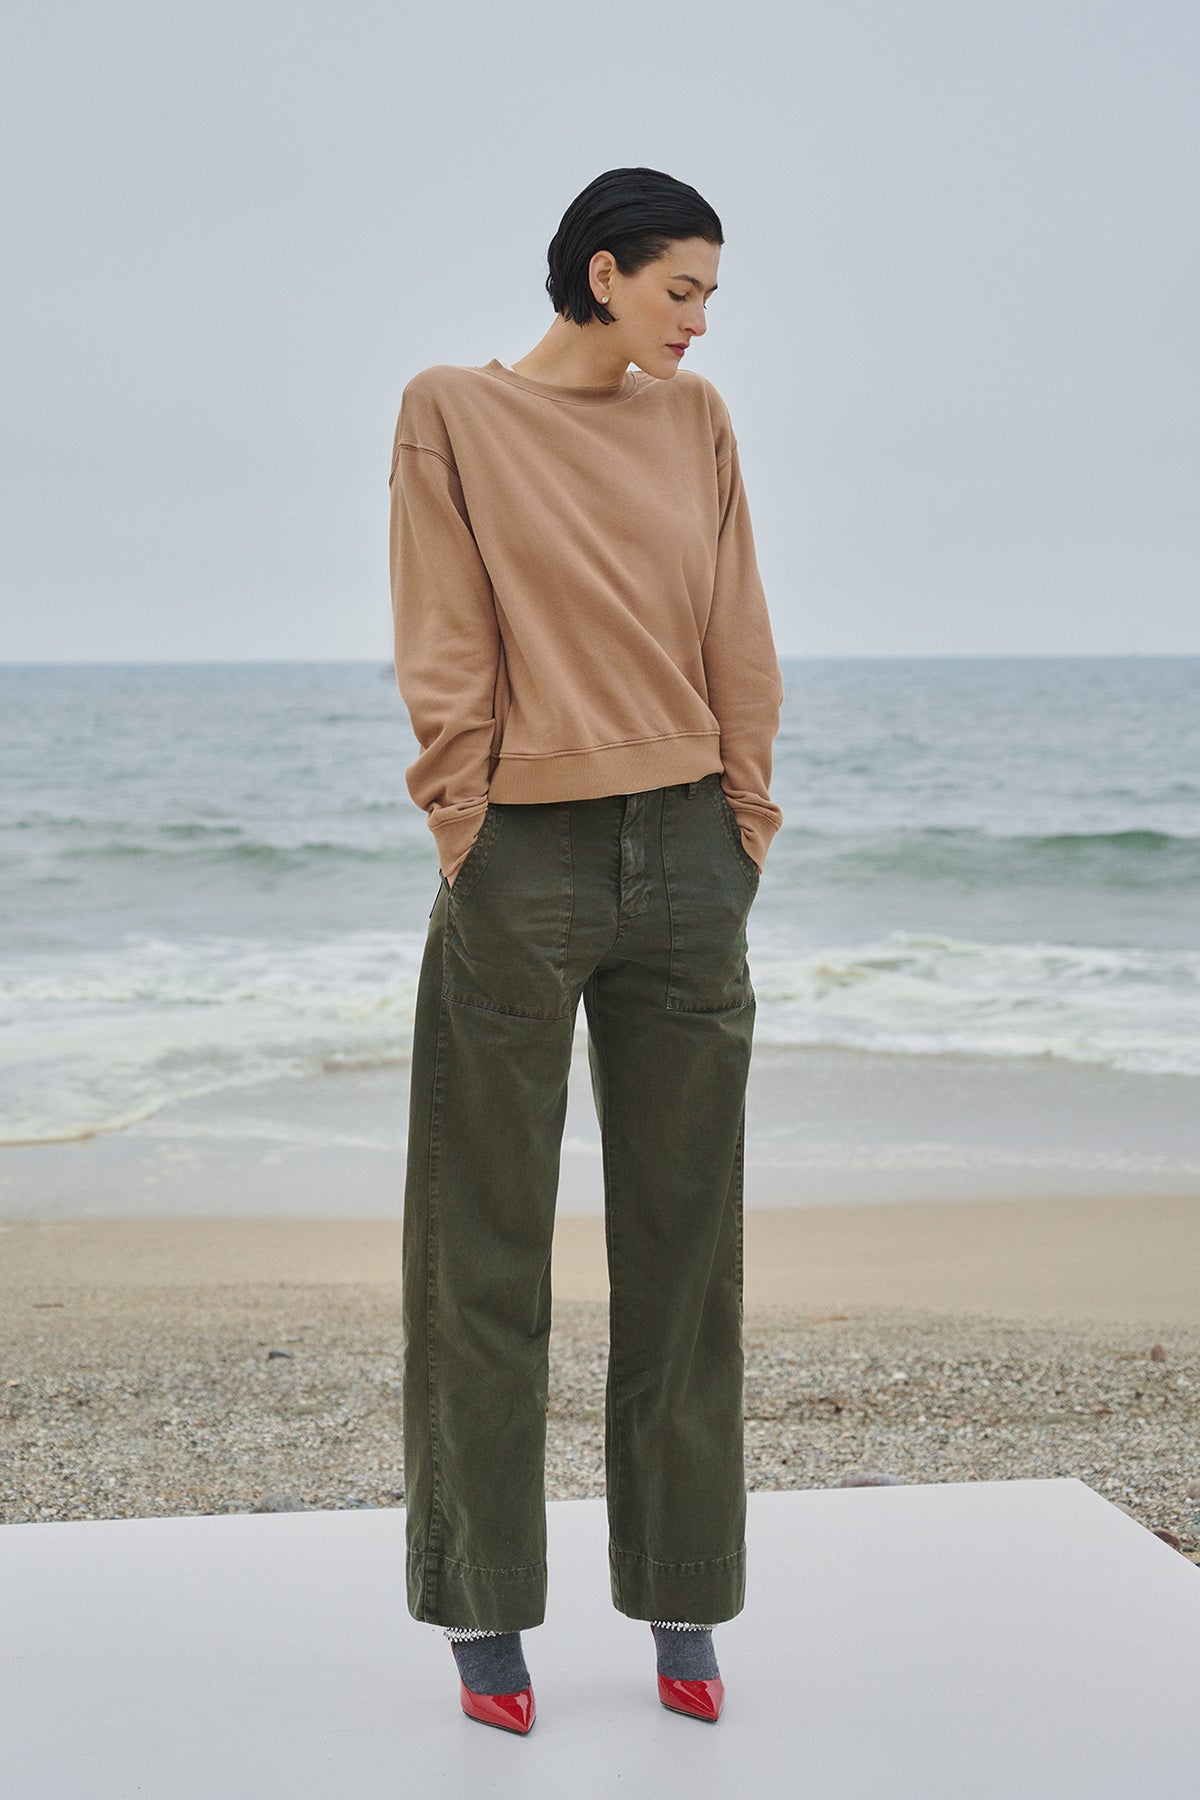 A woman is standing on a beach wearing the Velvet by Jenny Graham YNEZ SWEATSHIRT.-35547465744577